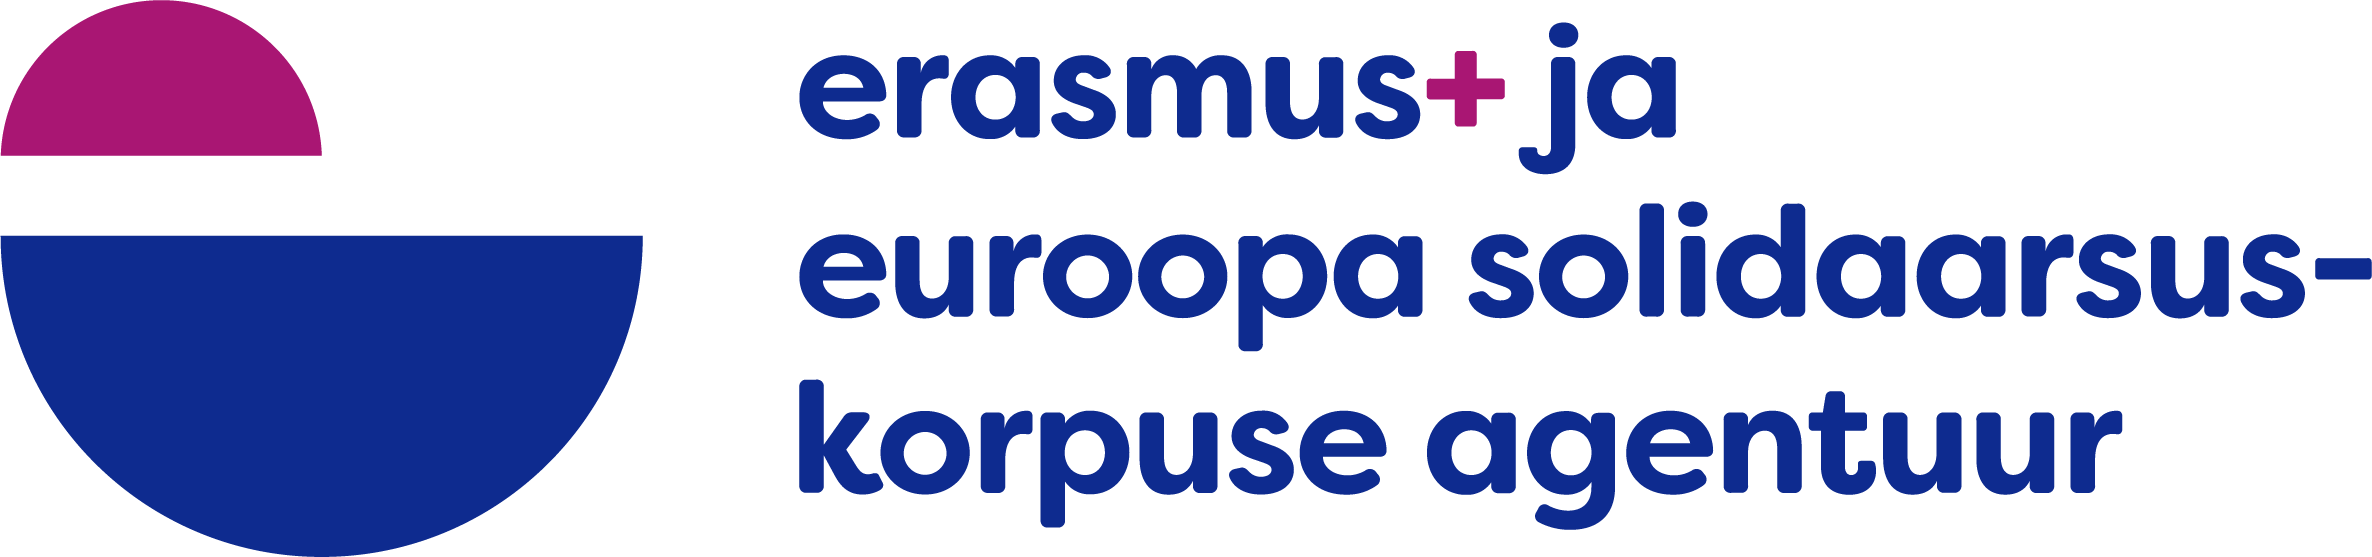 Erasmus+ and European Solidarity Corps Estonian Agency or National Agency